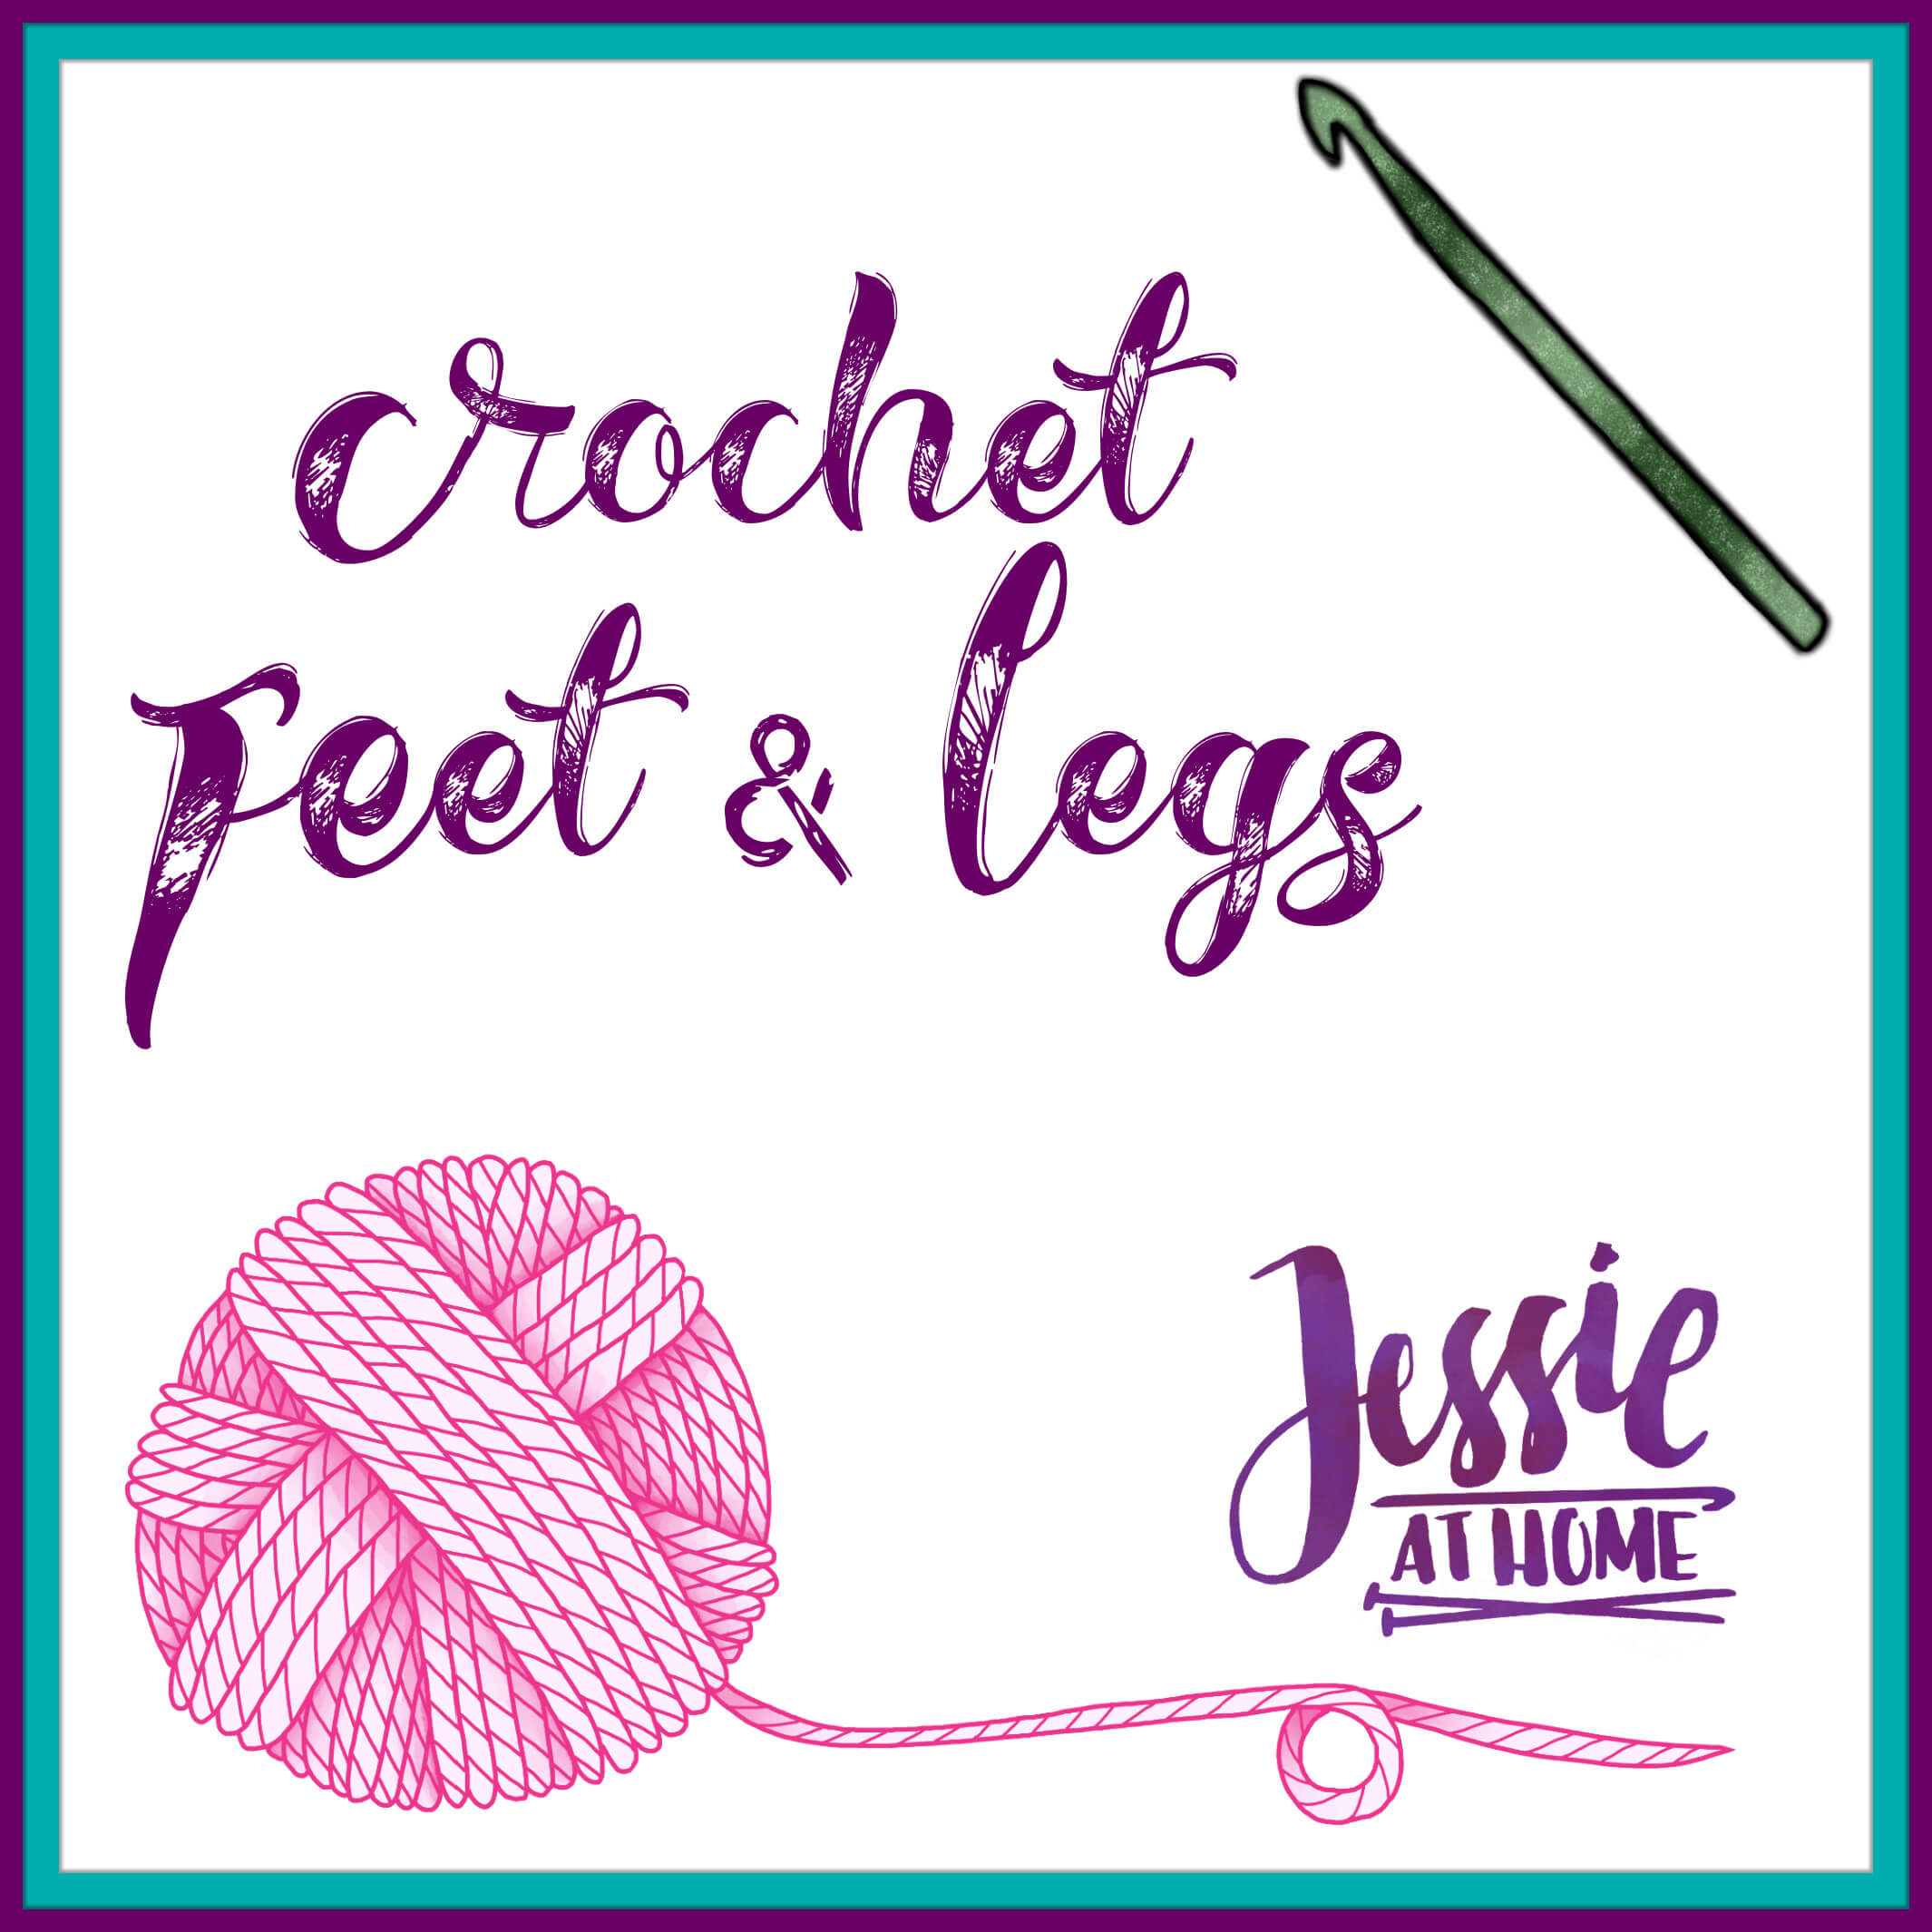 Crochet Feet & Legs Menu on Jessie At Home